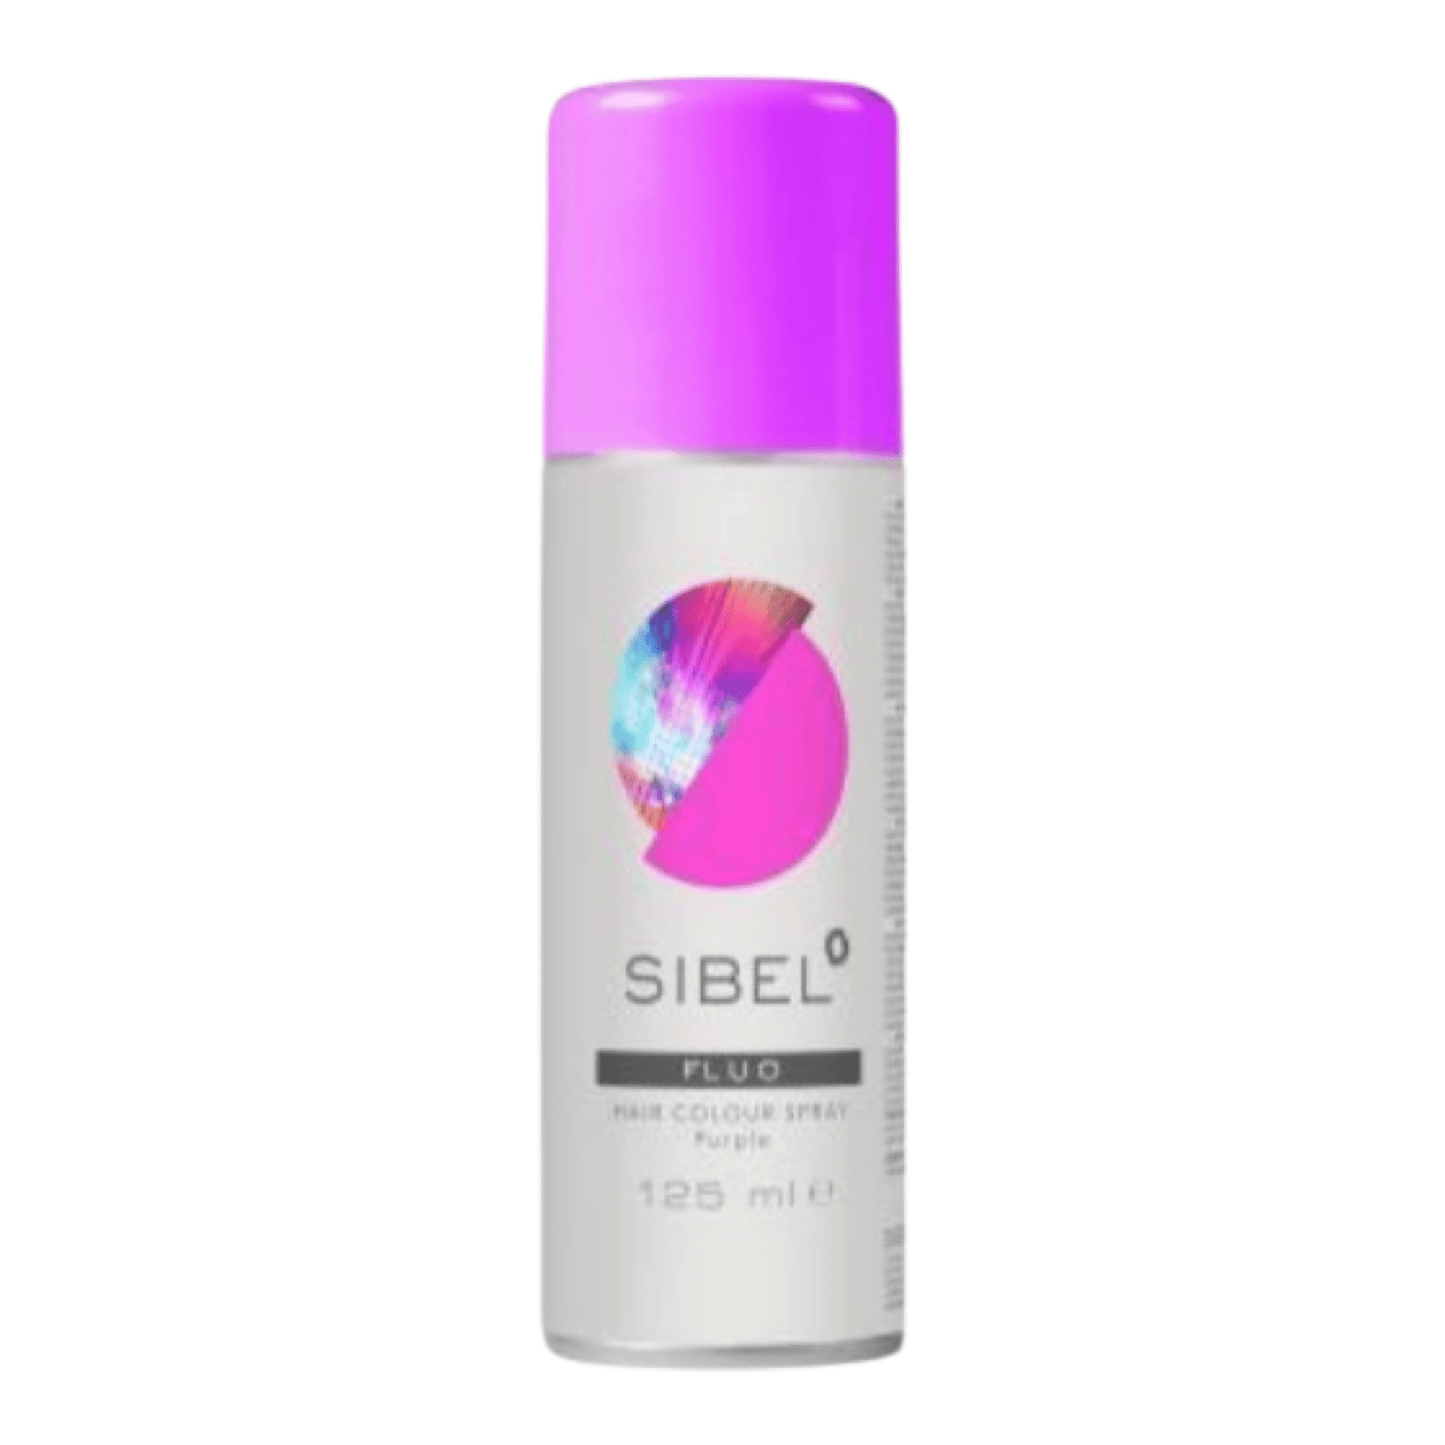 Sibel - color spray metal lilla 125 ml - Merle og Wilde